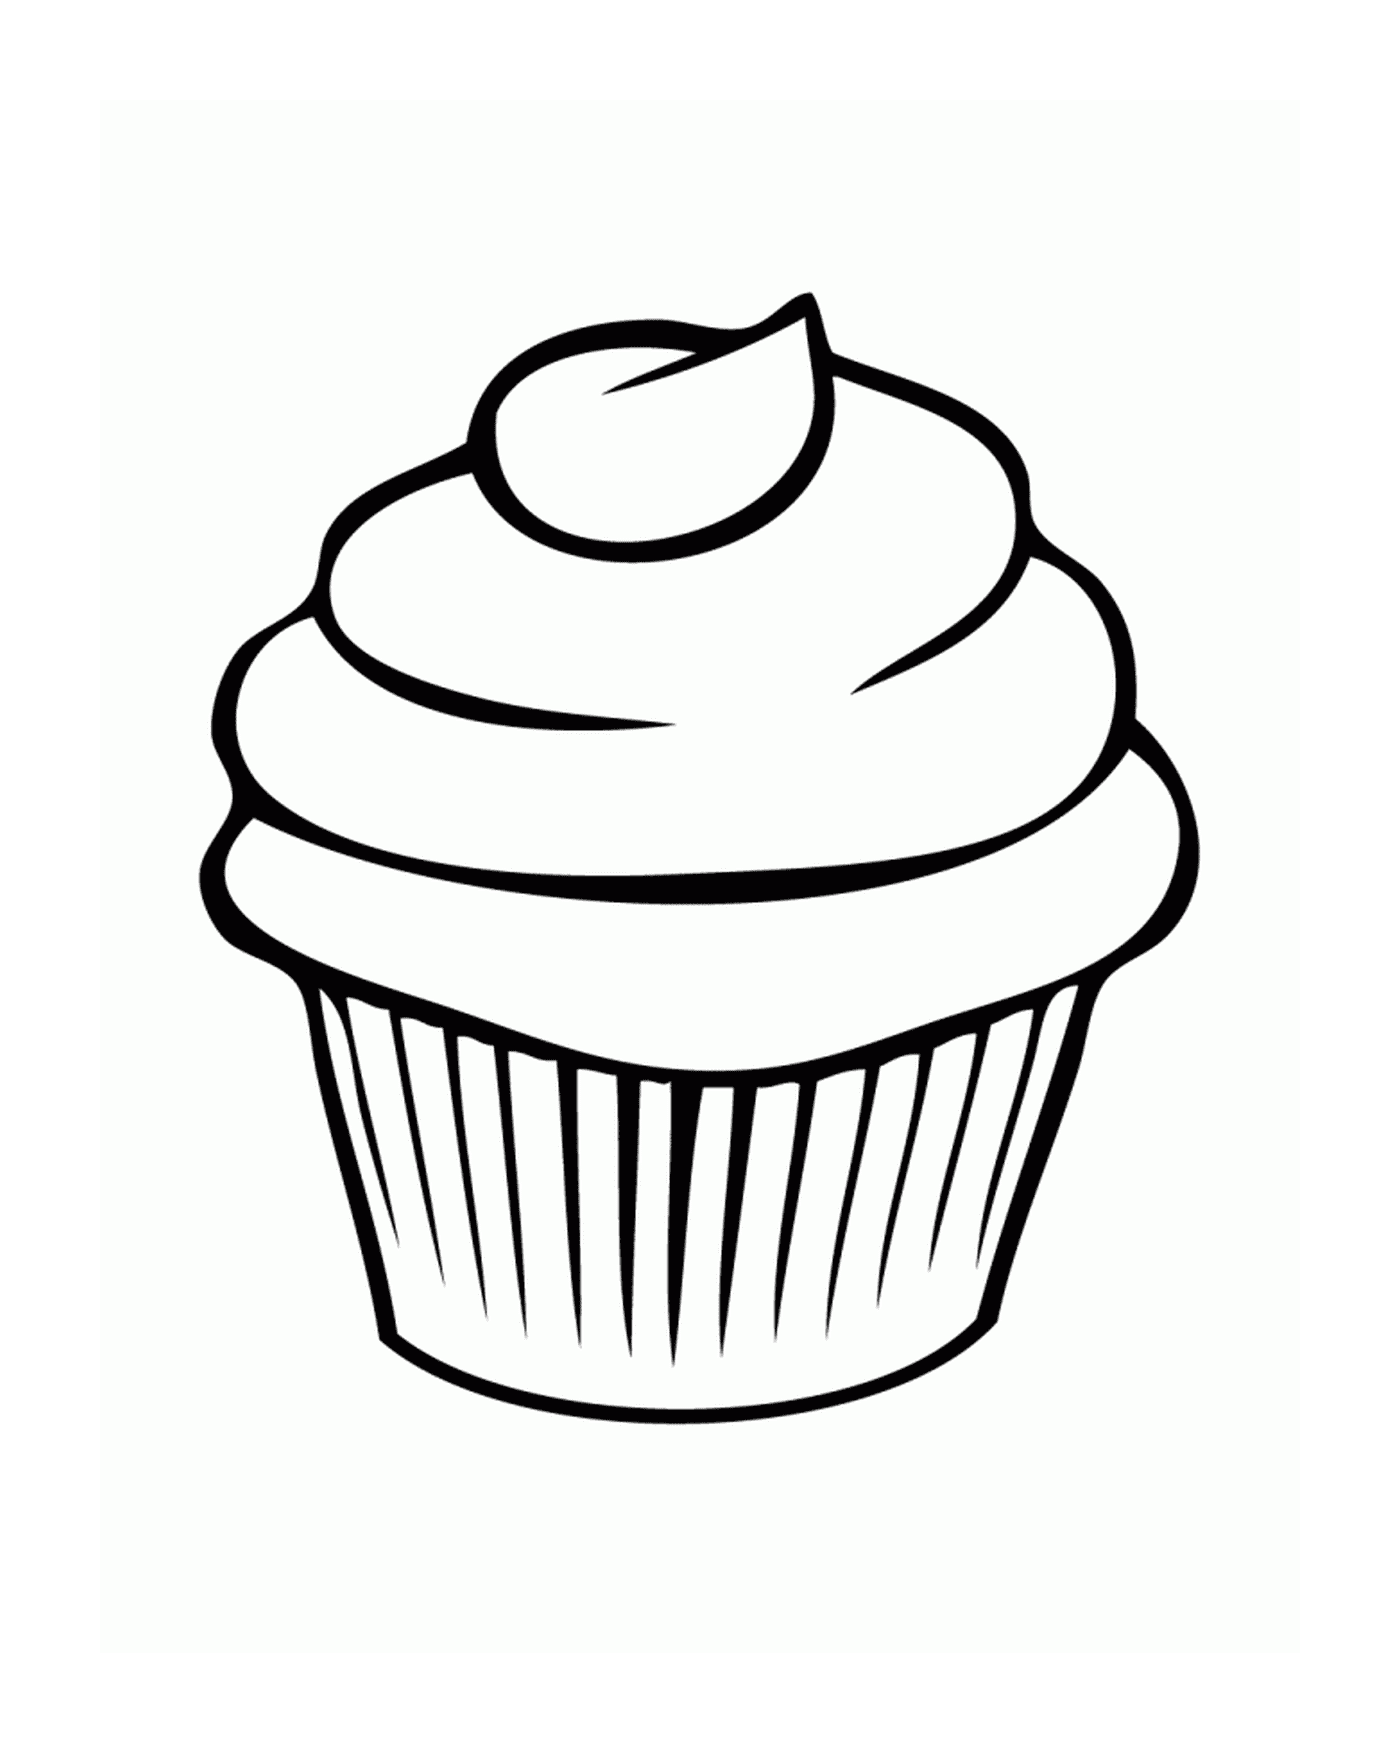  Un cupcake semplice e facile 